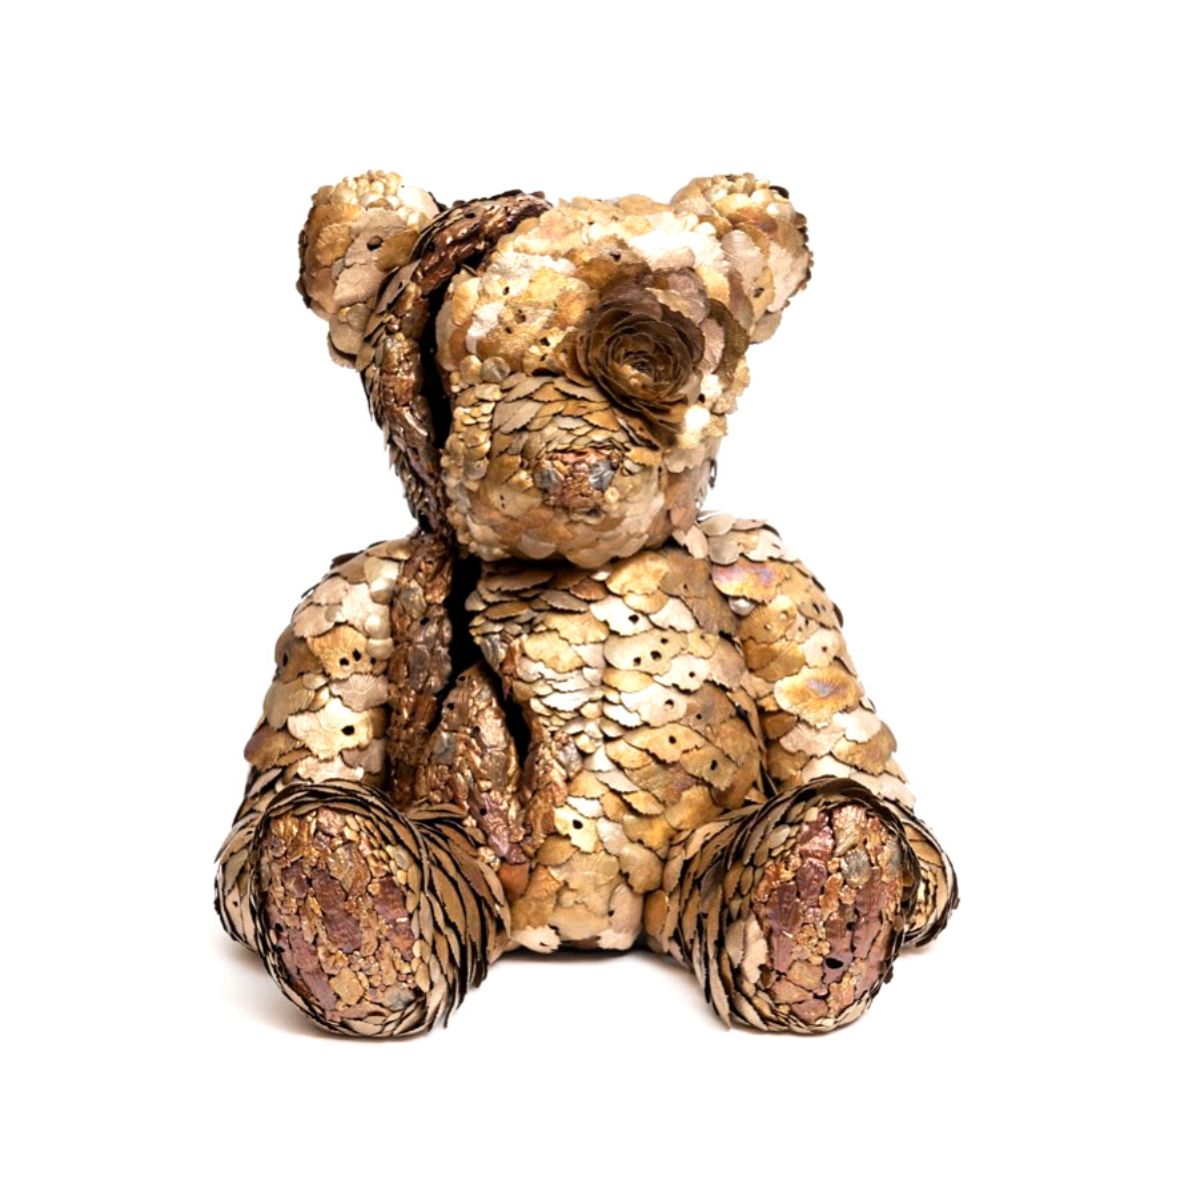 Animal sculptures made from metallic flowers gold teddy bear on Thursd